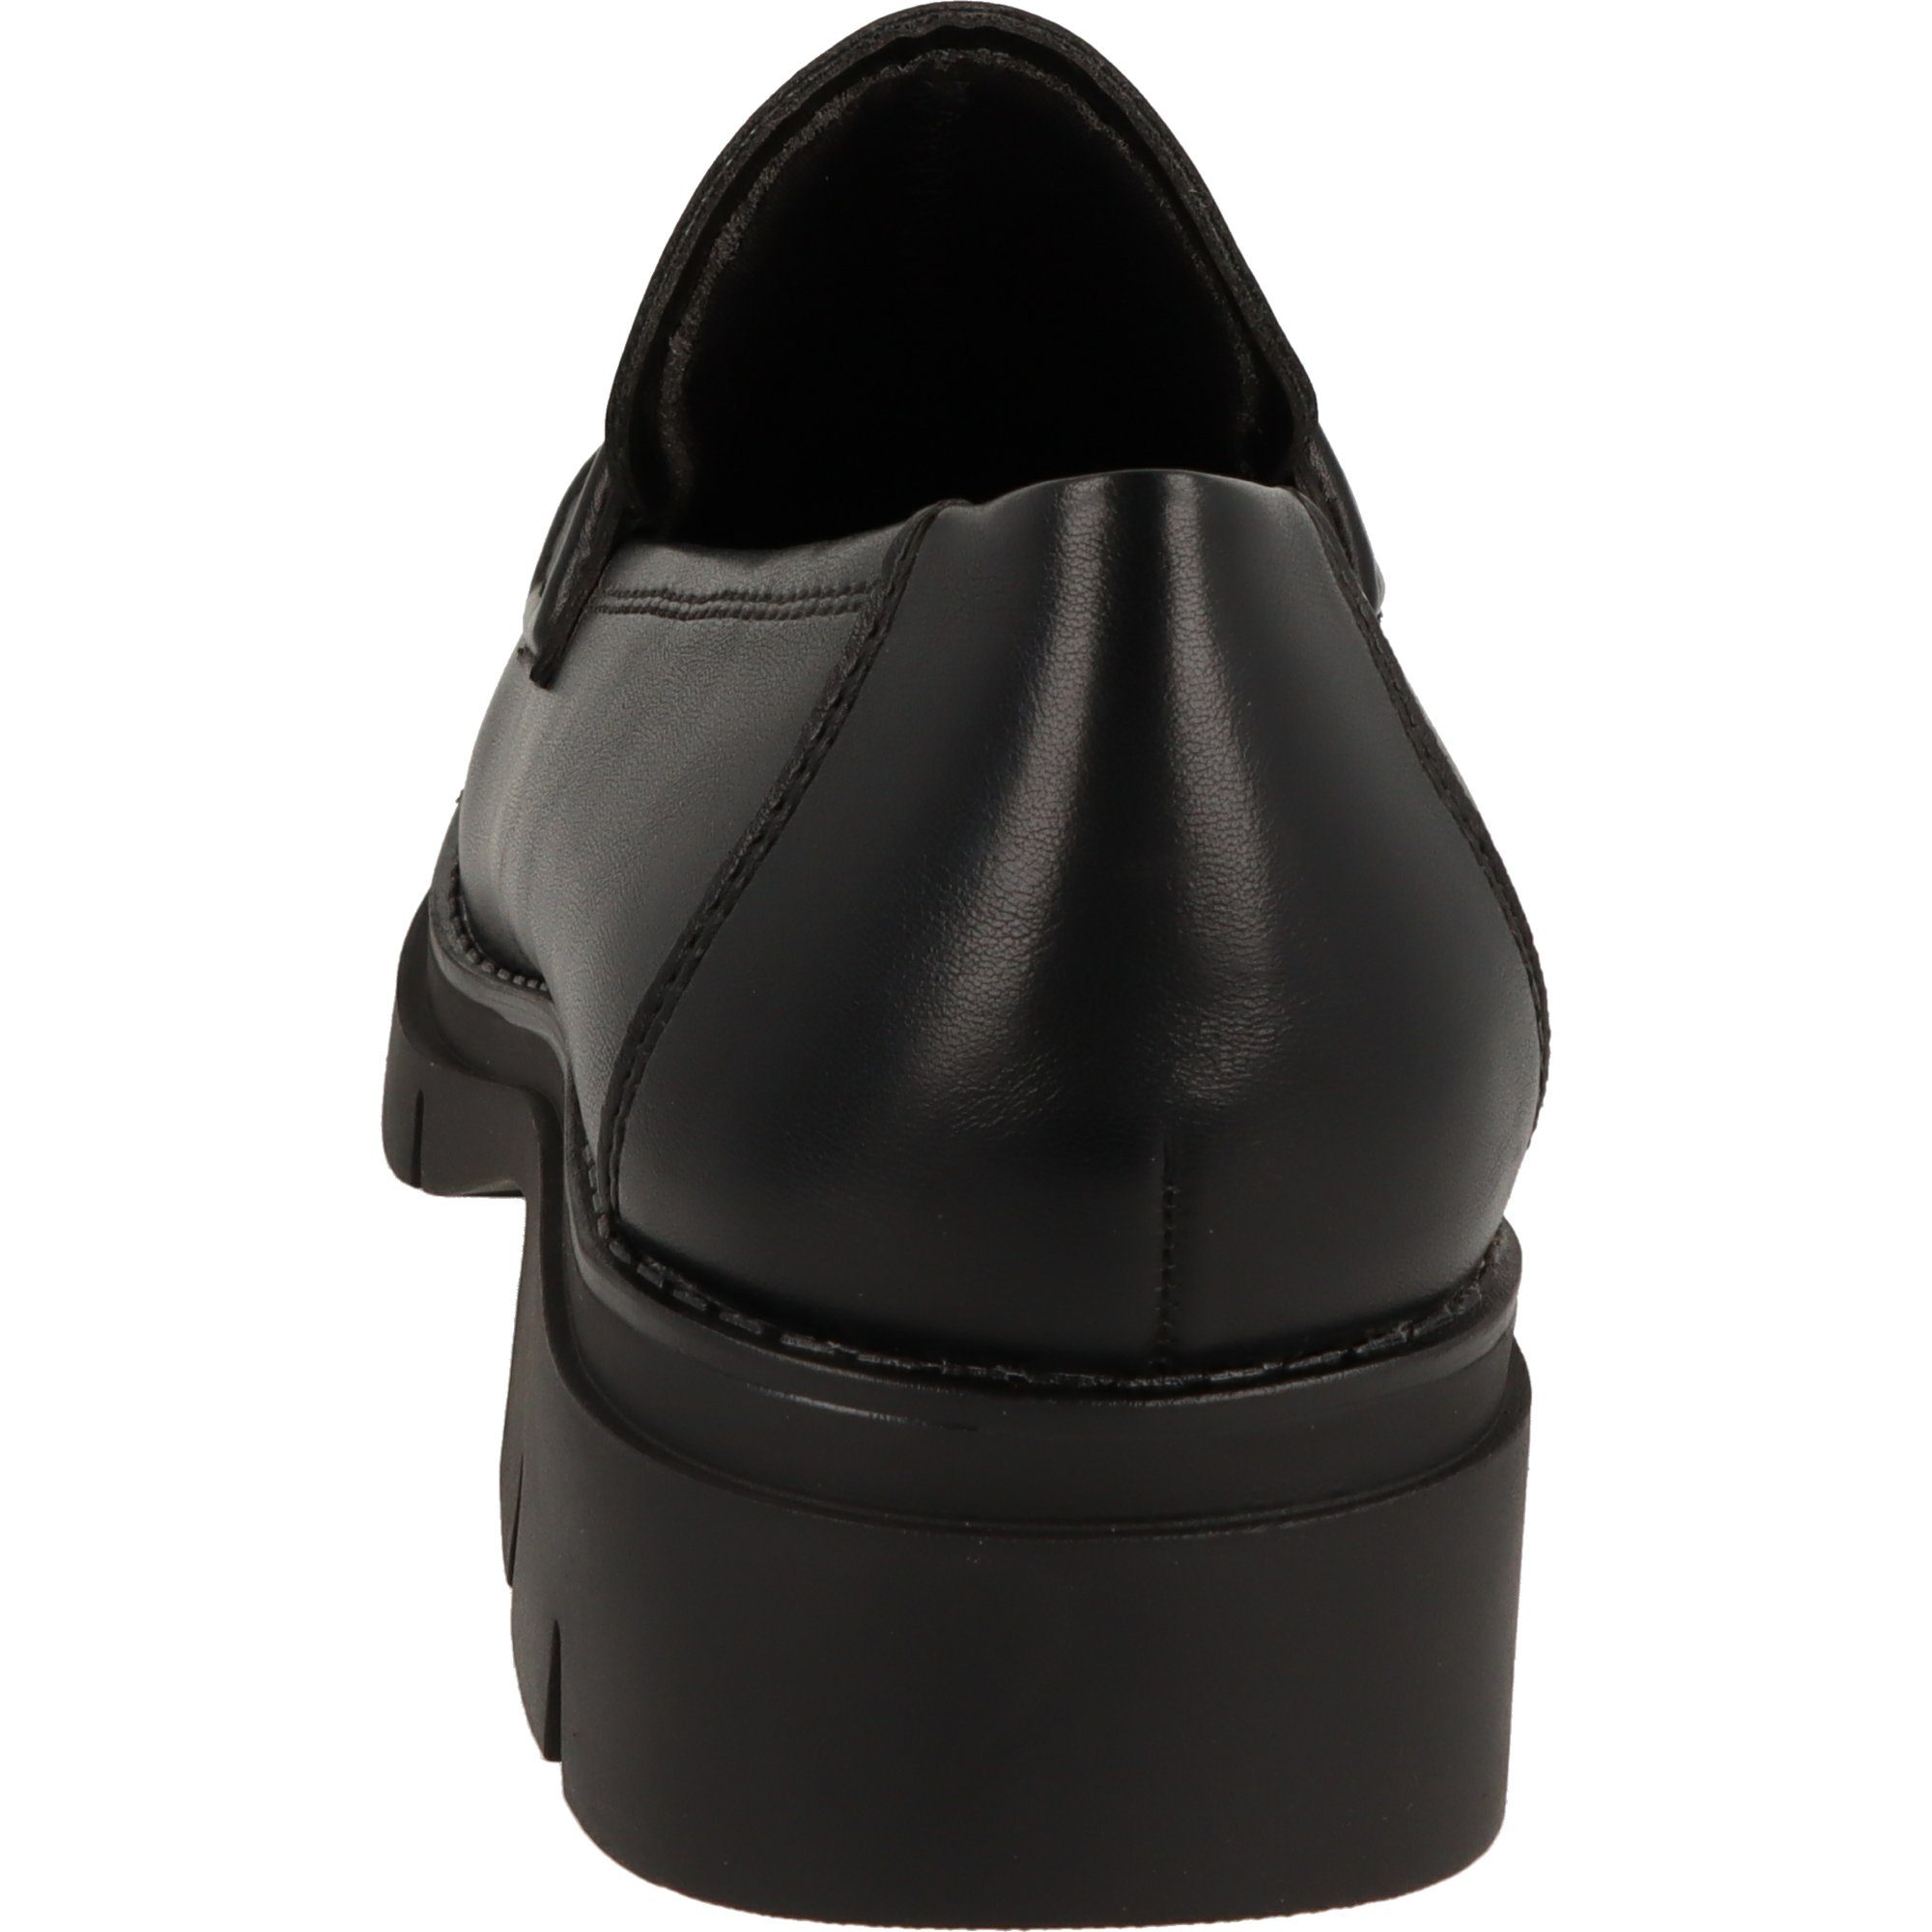 Komfort Schuhe Slipper Black 1-24313-41 Damen Halbschuhe Matt Tamaris Loafer Vegan